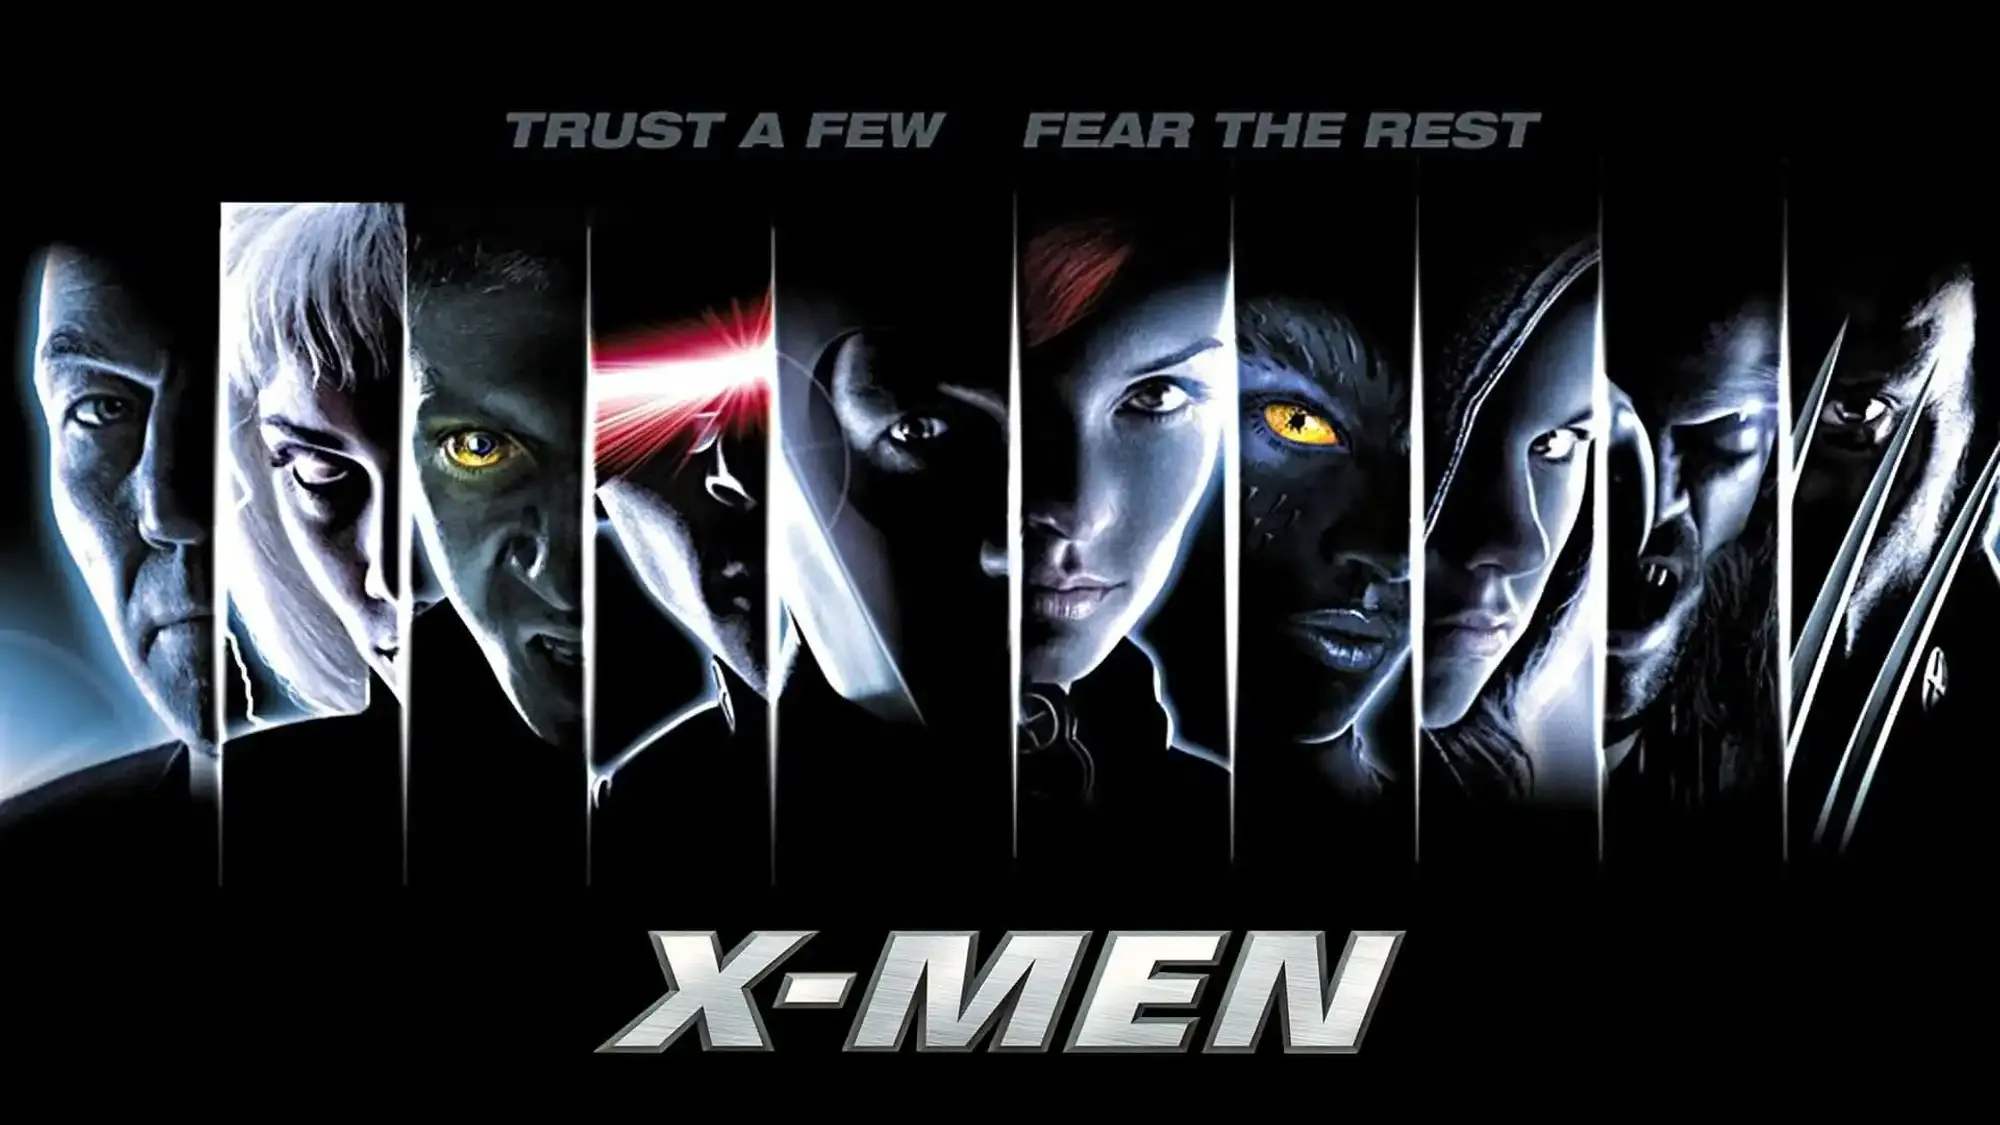 X-Men movie review